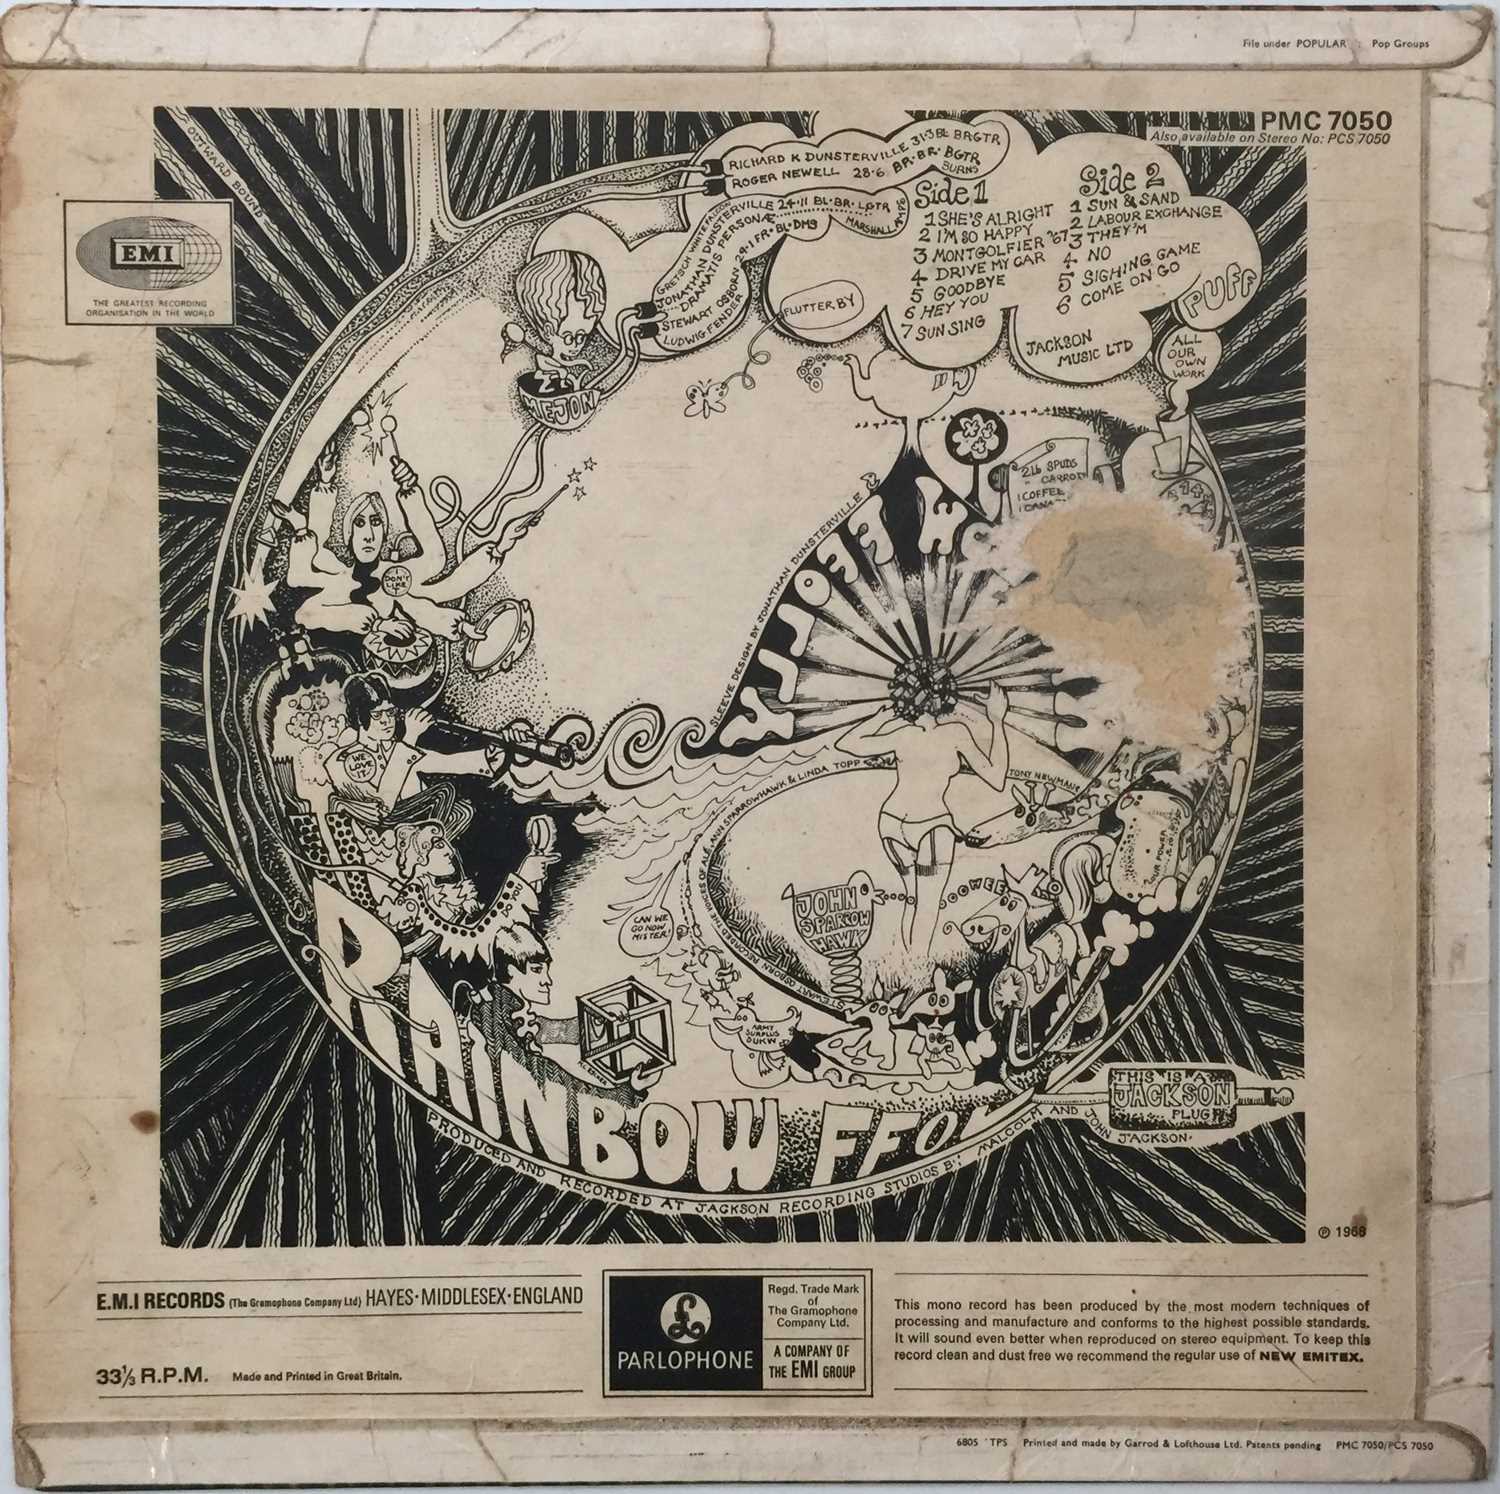 RAINBOW FFOLLY - SALLIES FFORTH LP (ORIGINAL UK MONO - PMC 7050) - Image 3 of 5